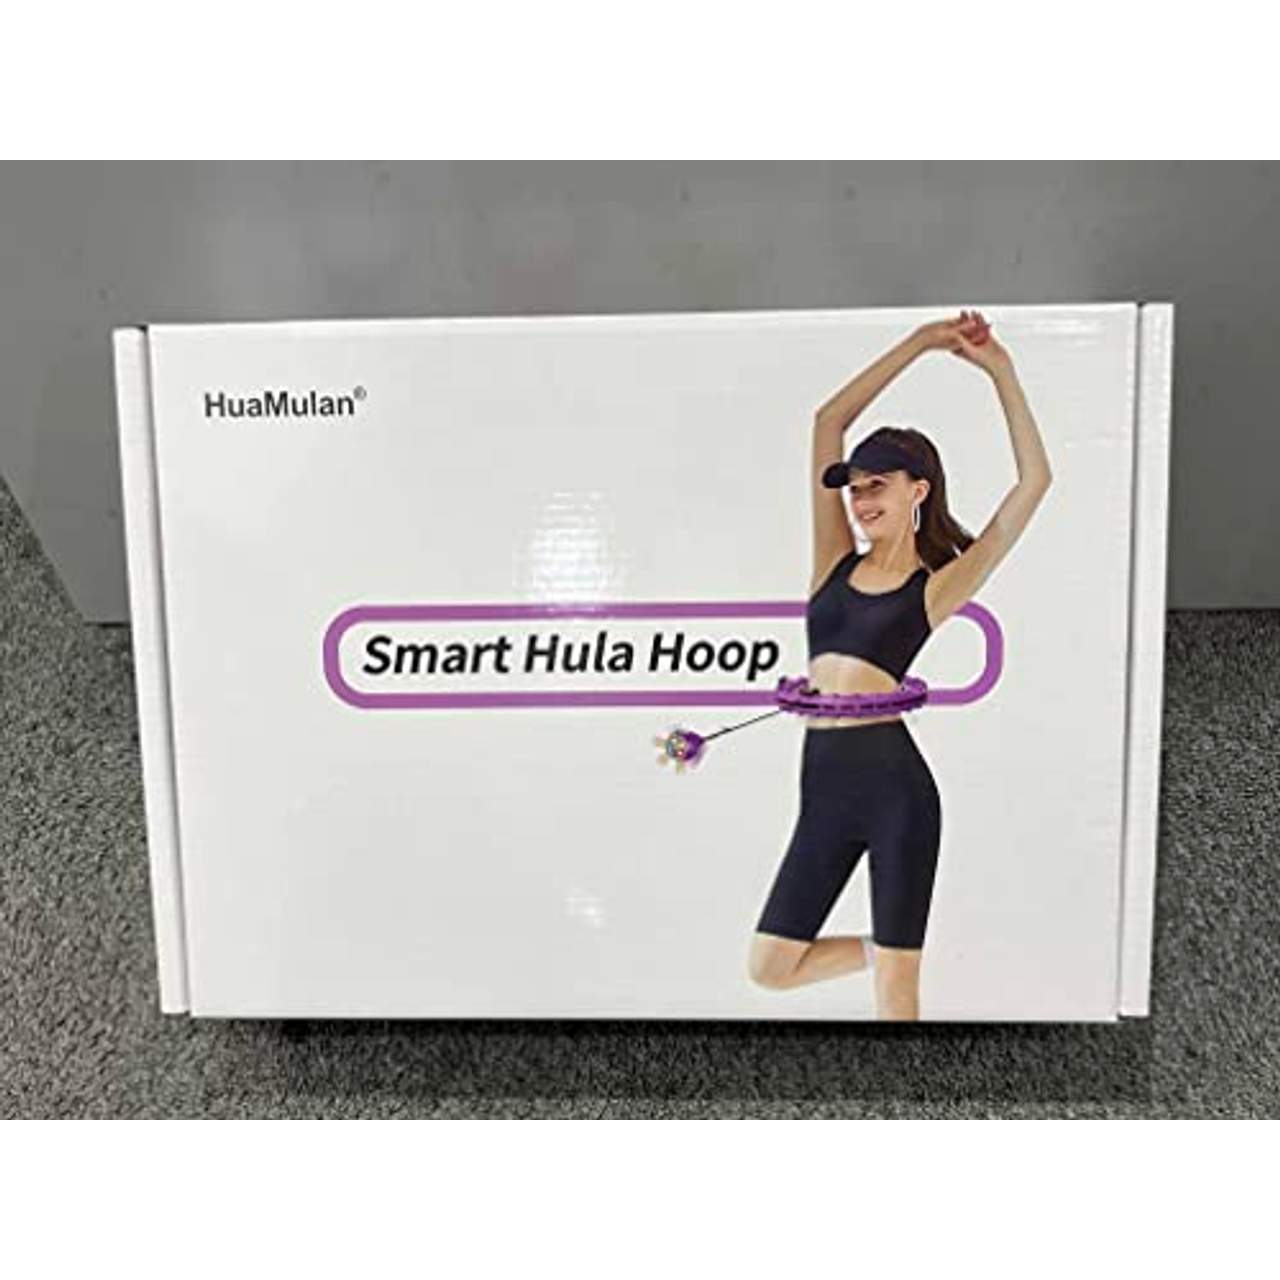 HuaMulan Smart Hula Hoop